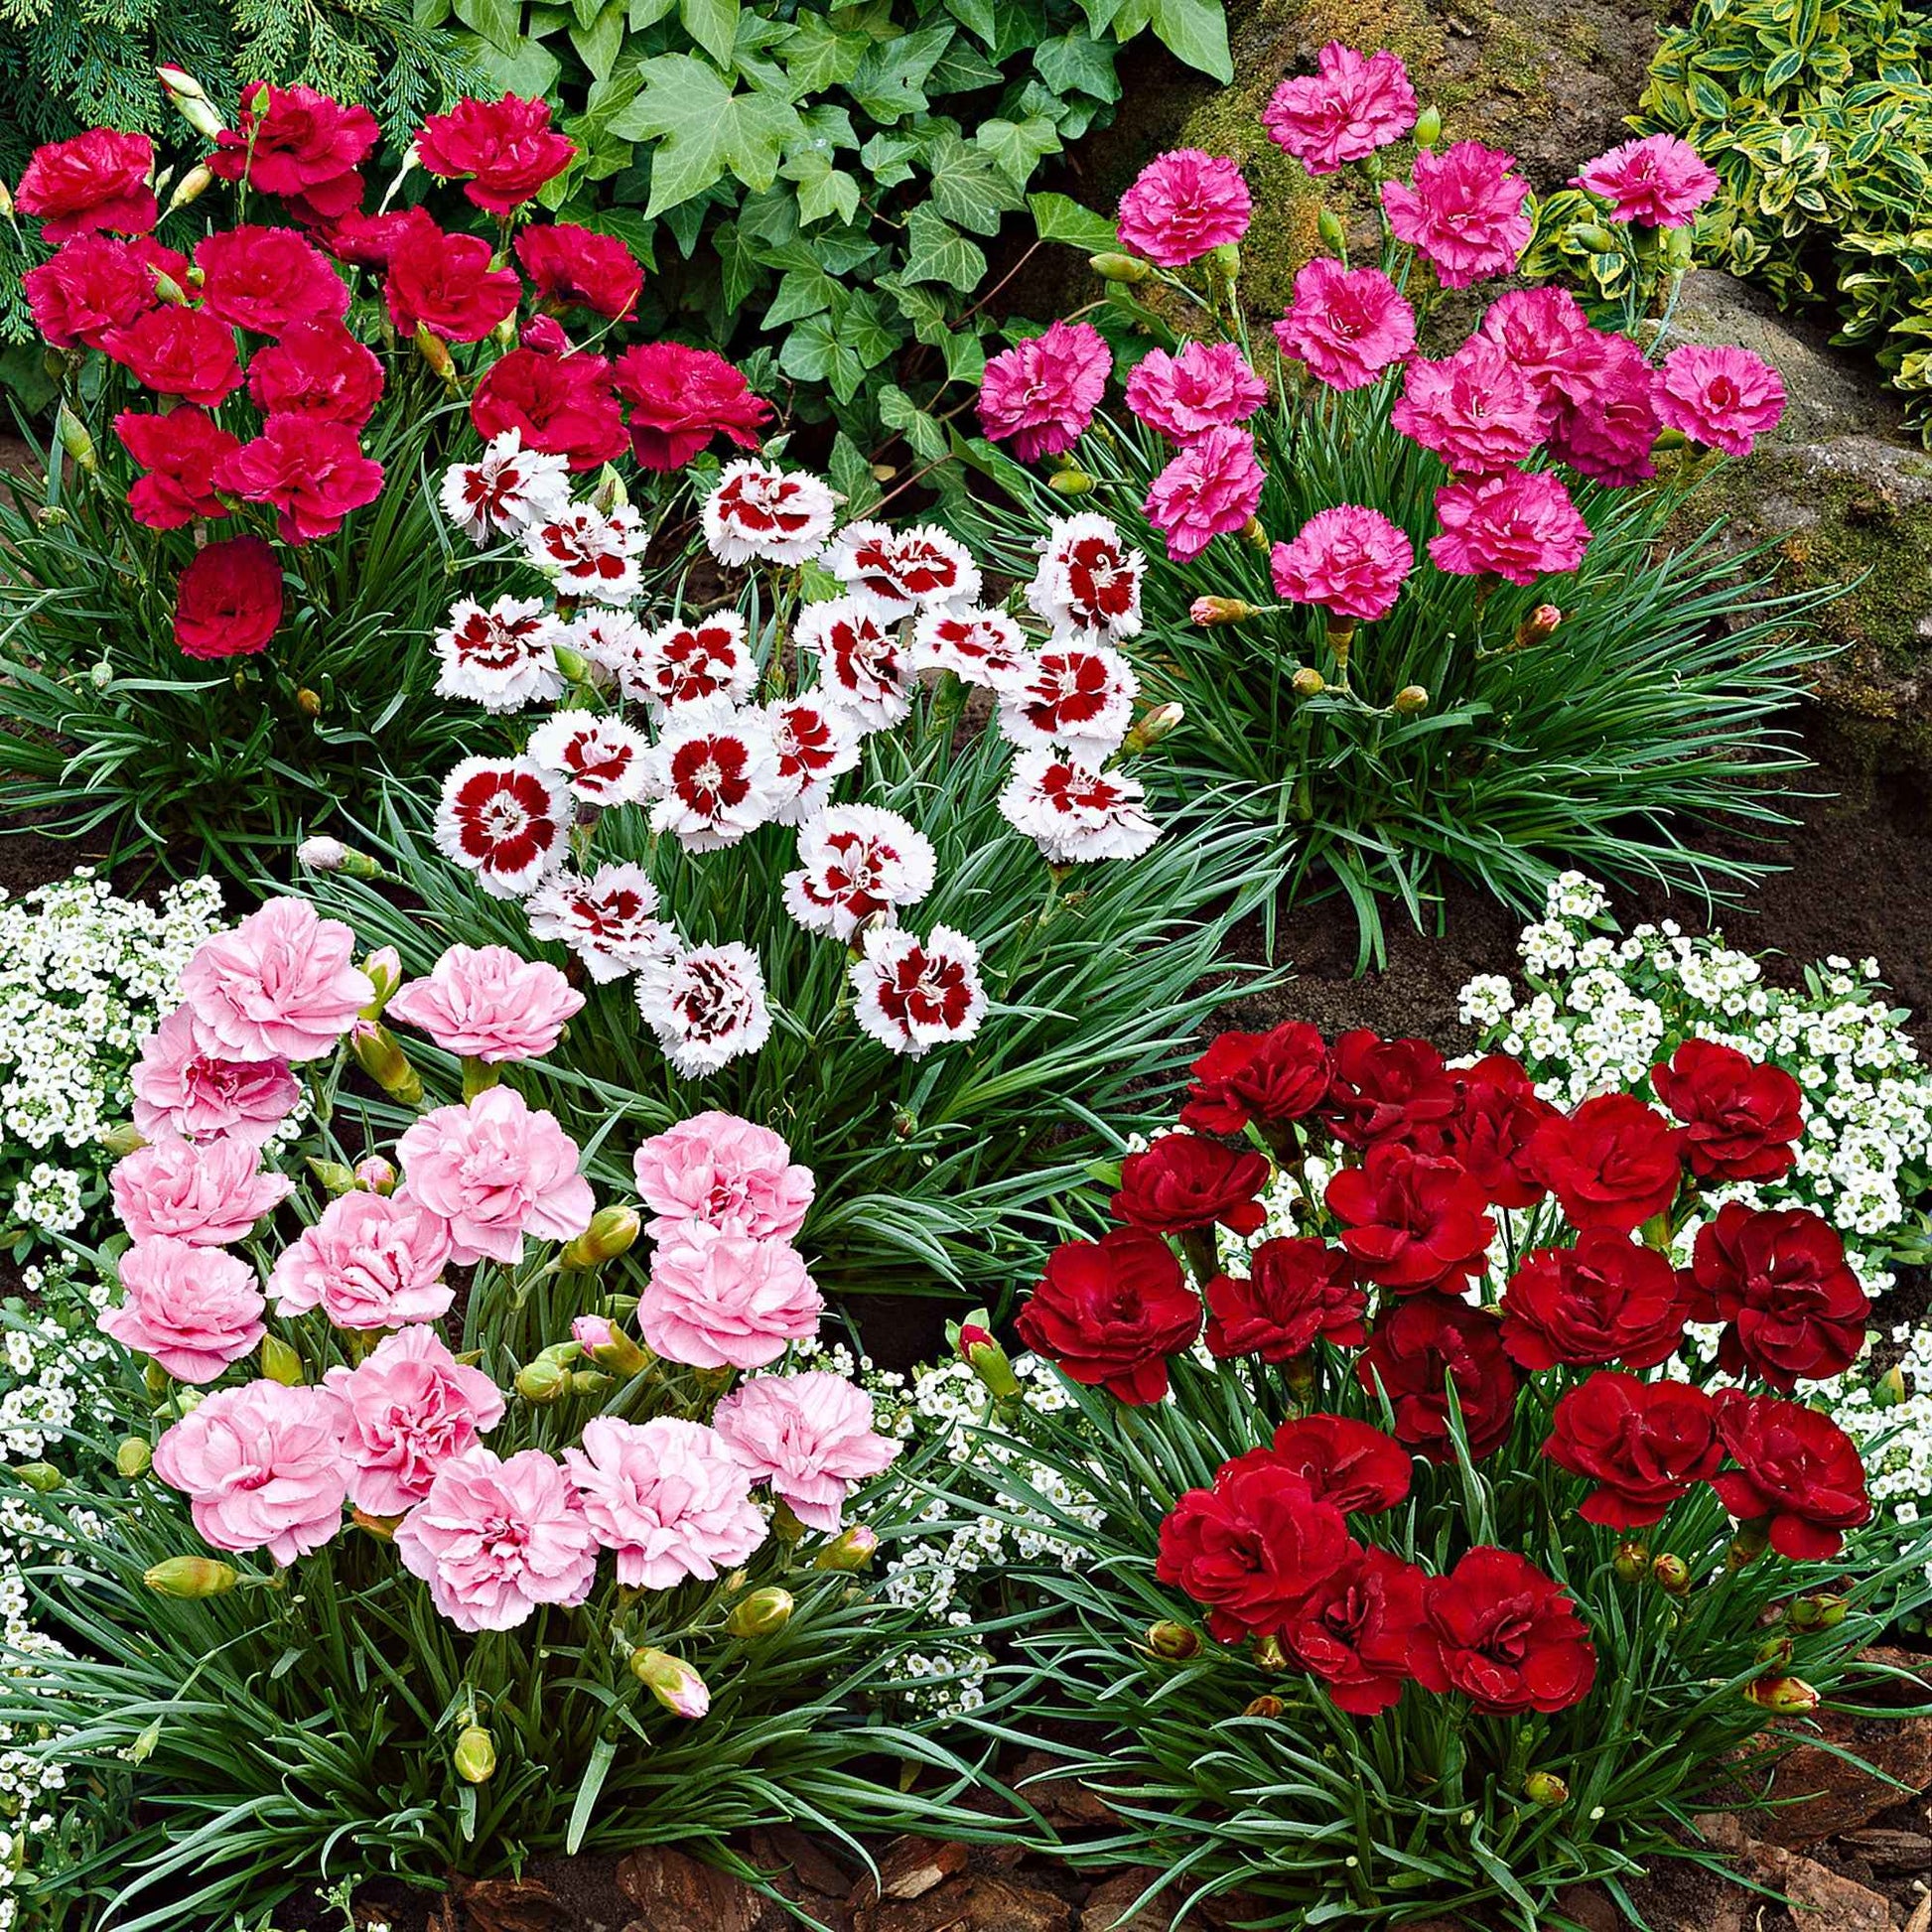 6x Grasanjer Dianthus -Mix Pretty Pink Rood-Wit-Roze - Winterhard - Groenblijvende tuinplanten